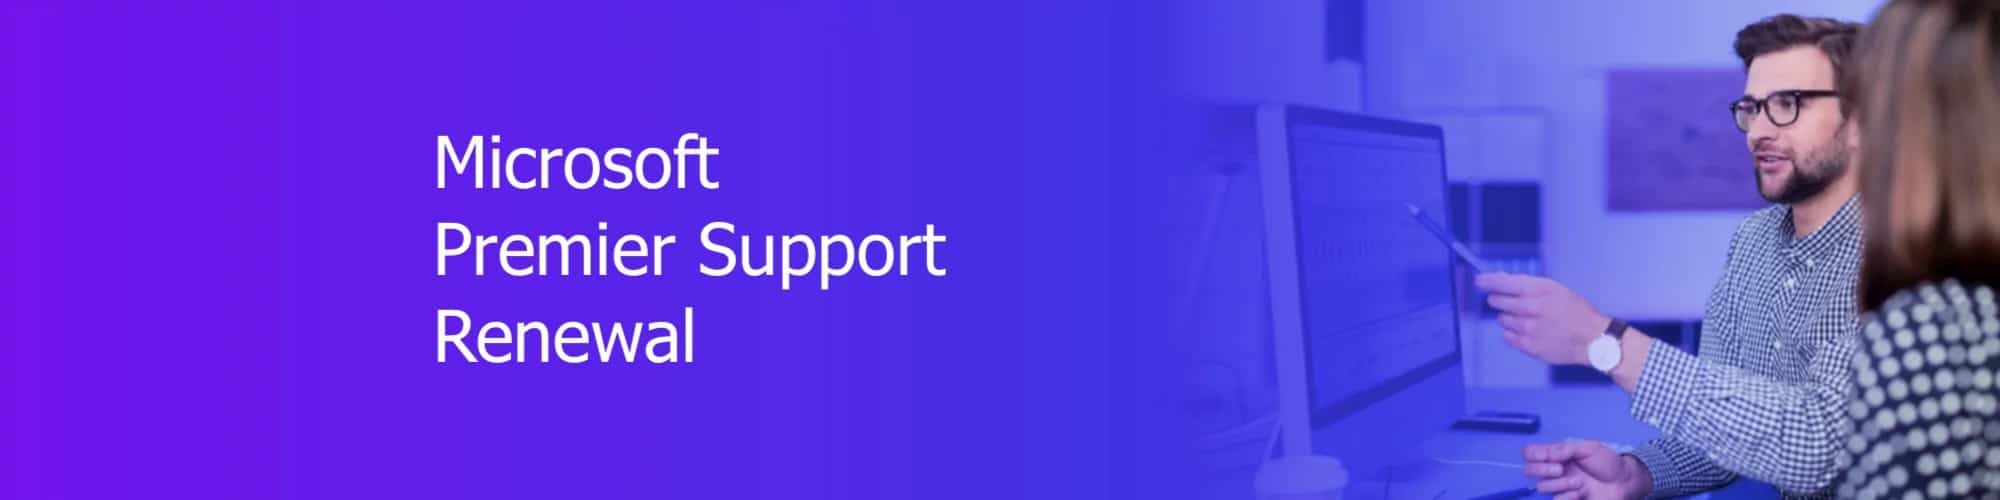 Microsoft Premier Support renewal